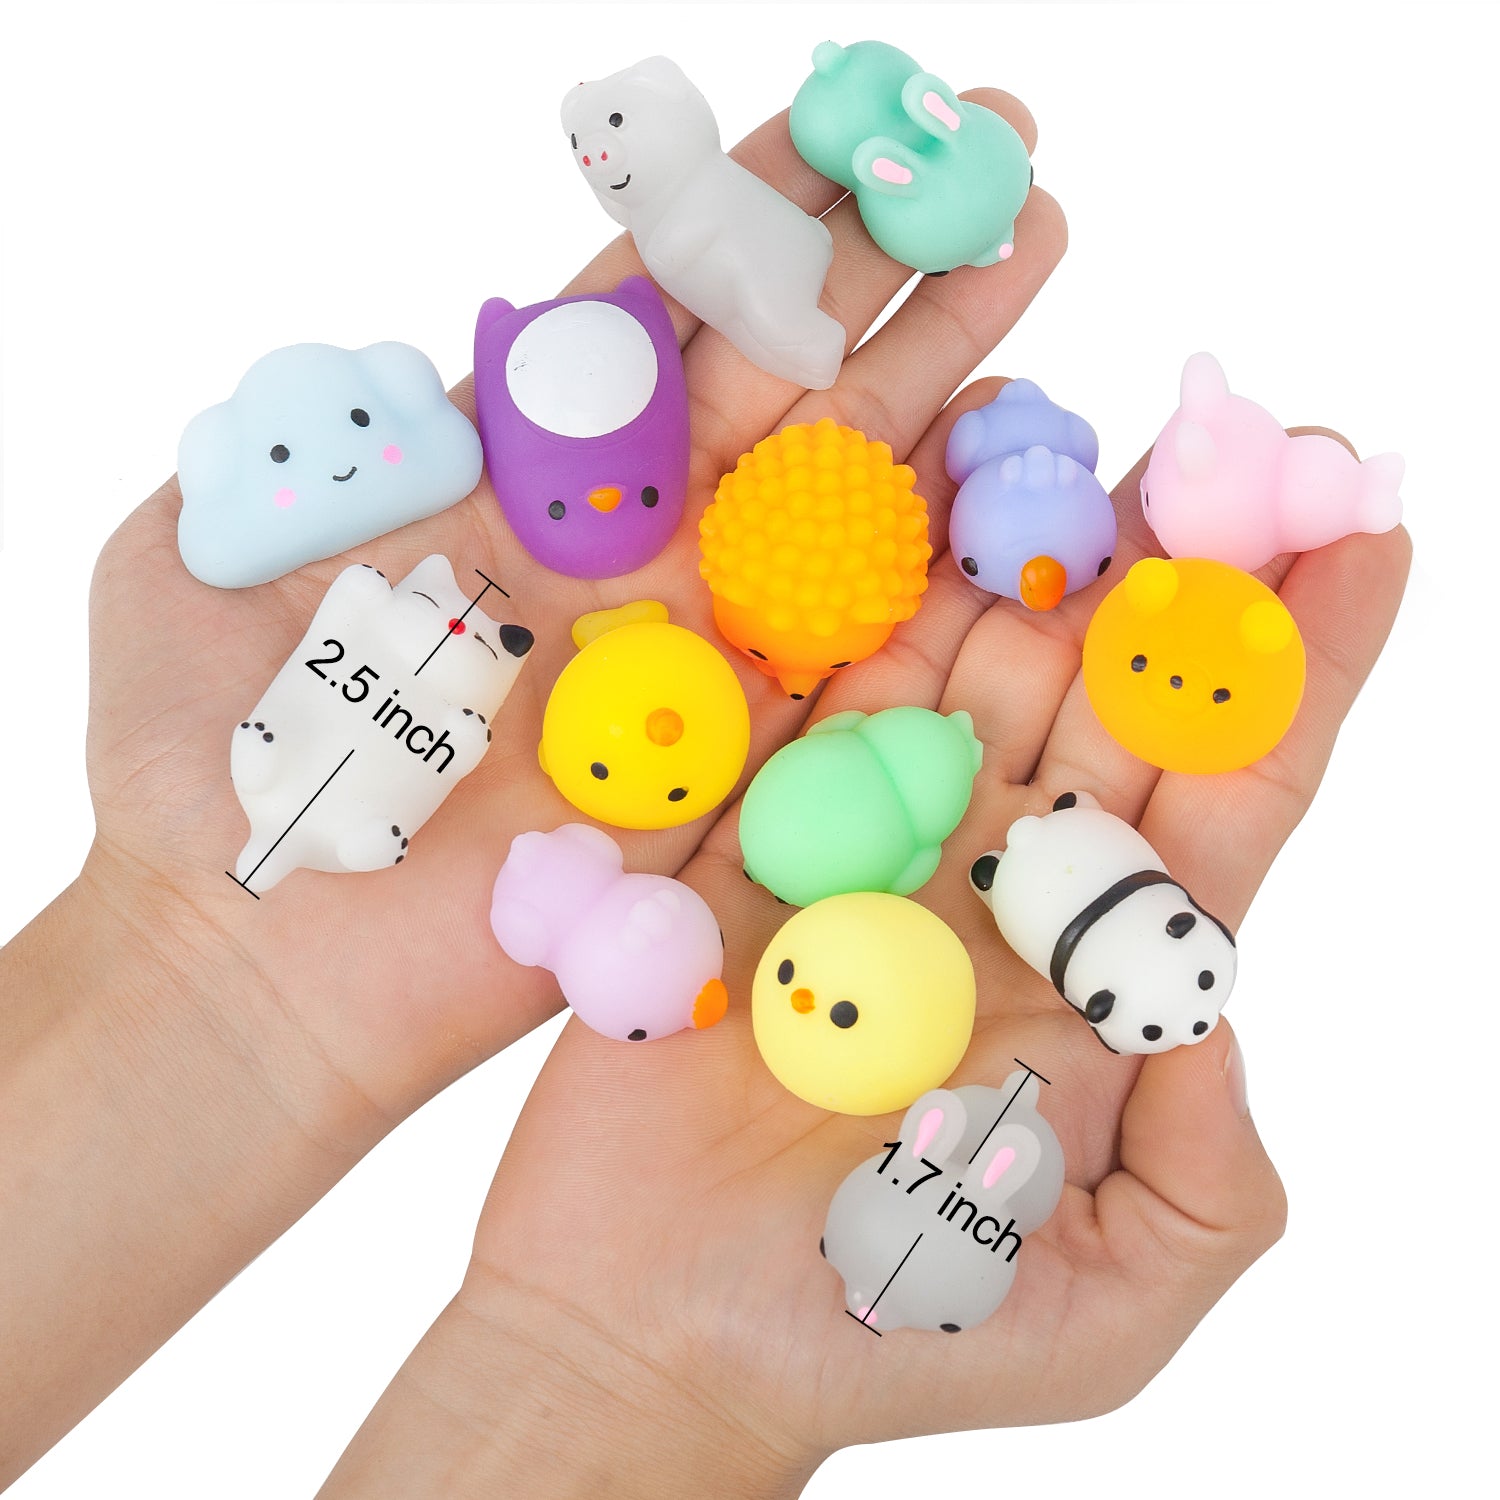 100 PCS Mochi Squishy Toys Kawaii Squishies Stress Relief Toys